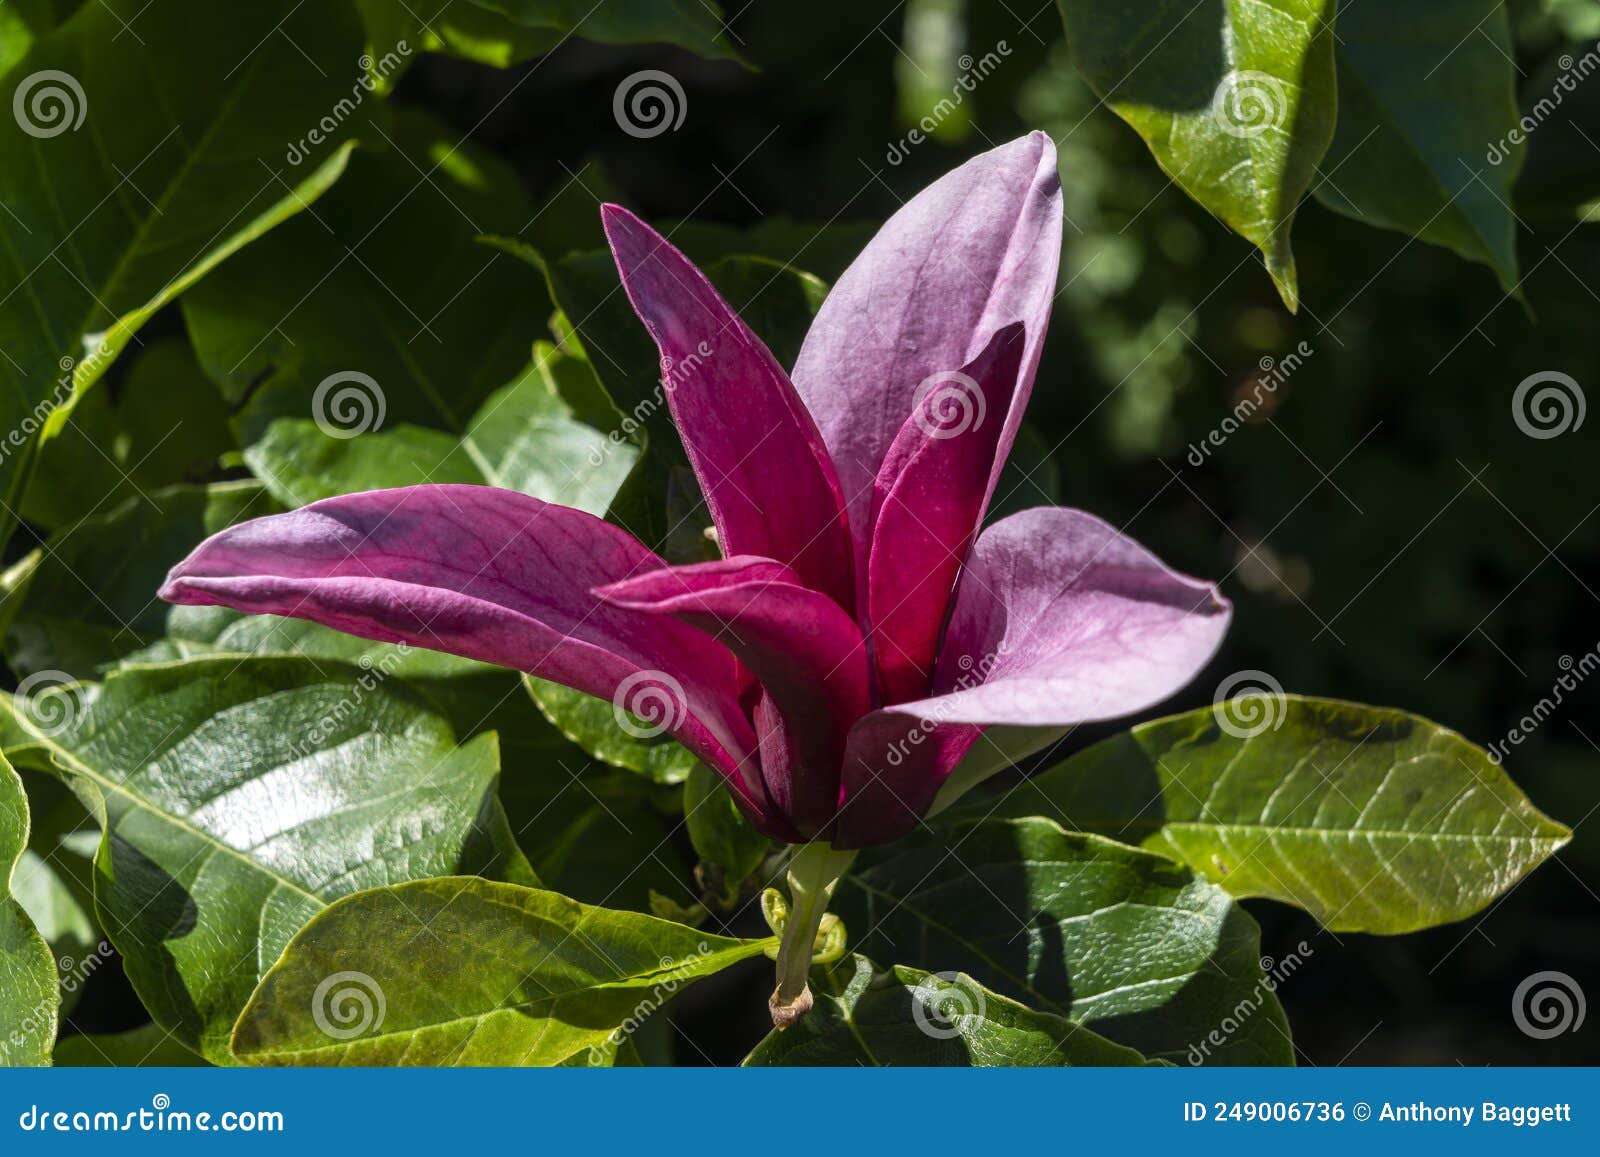 magnolia liliiflora `nigra